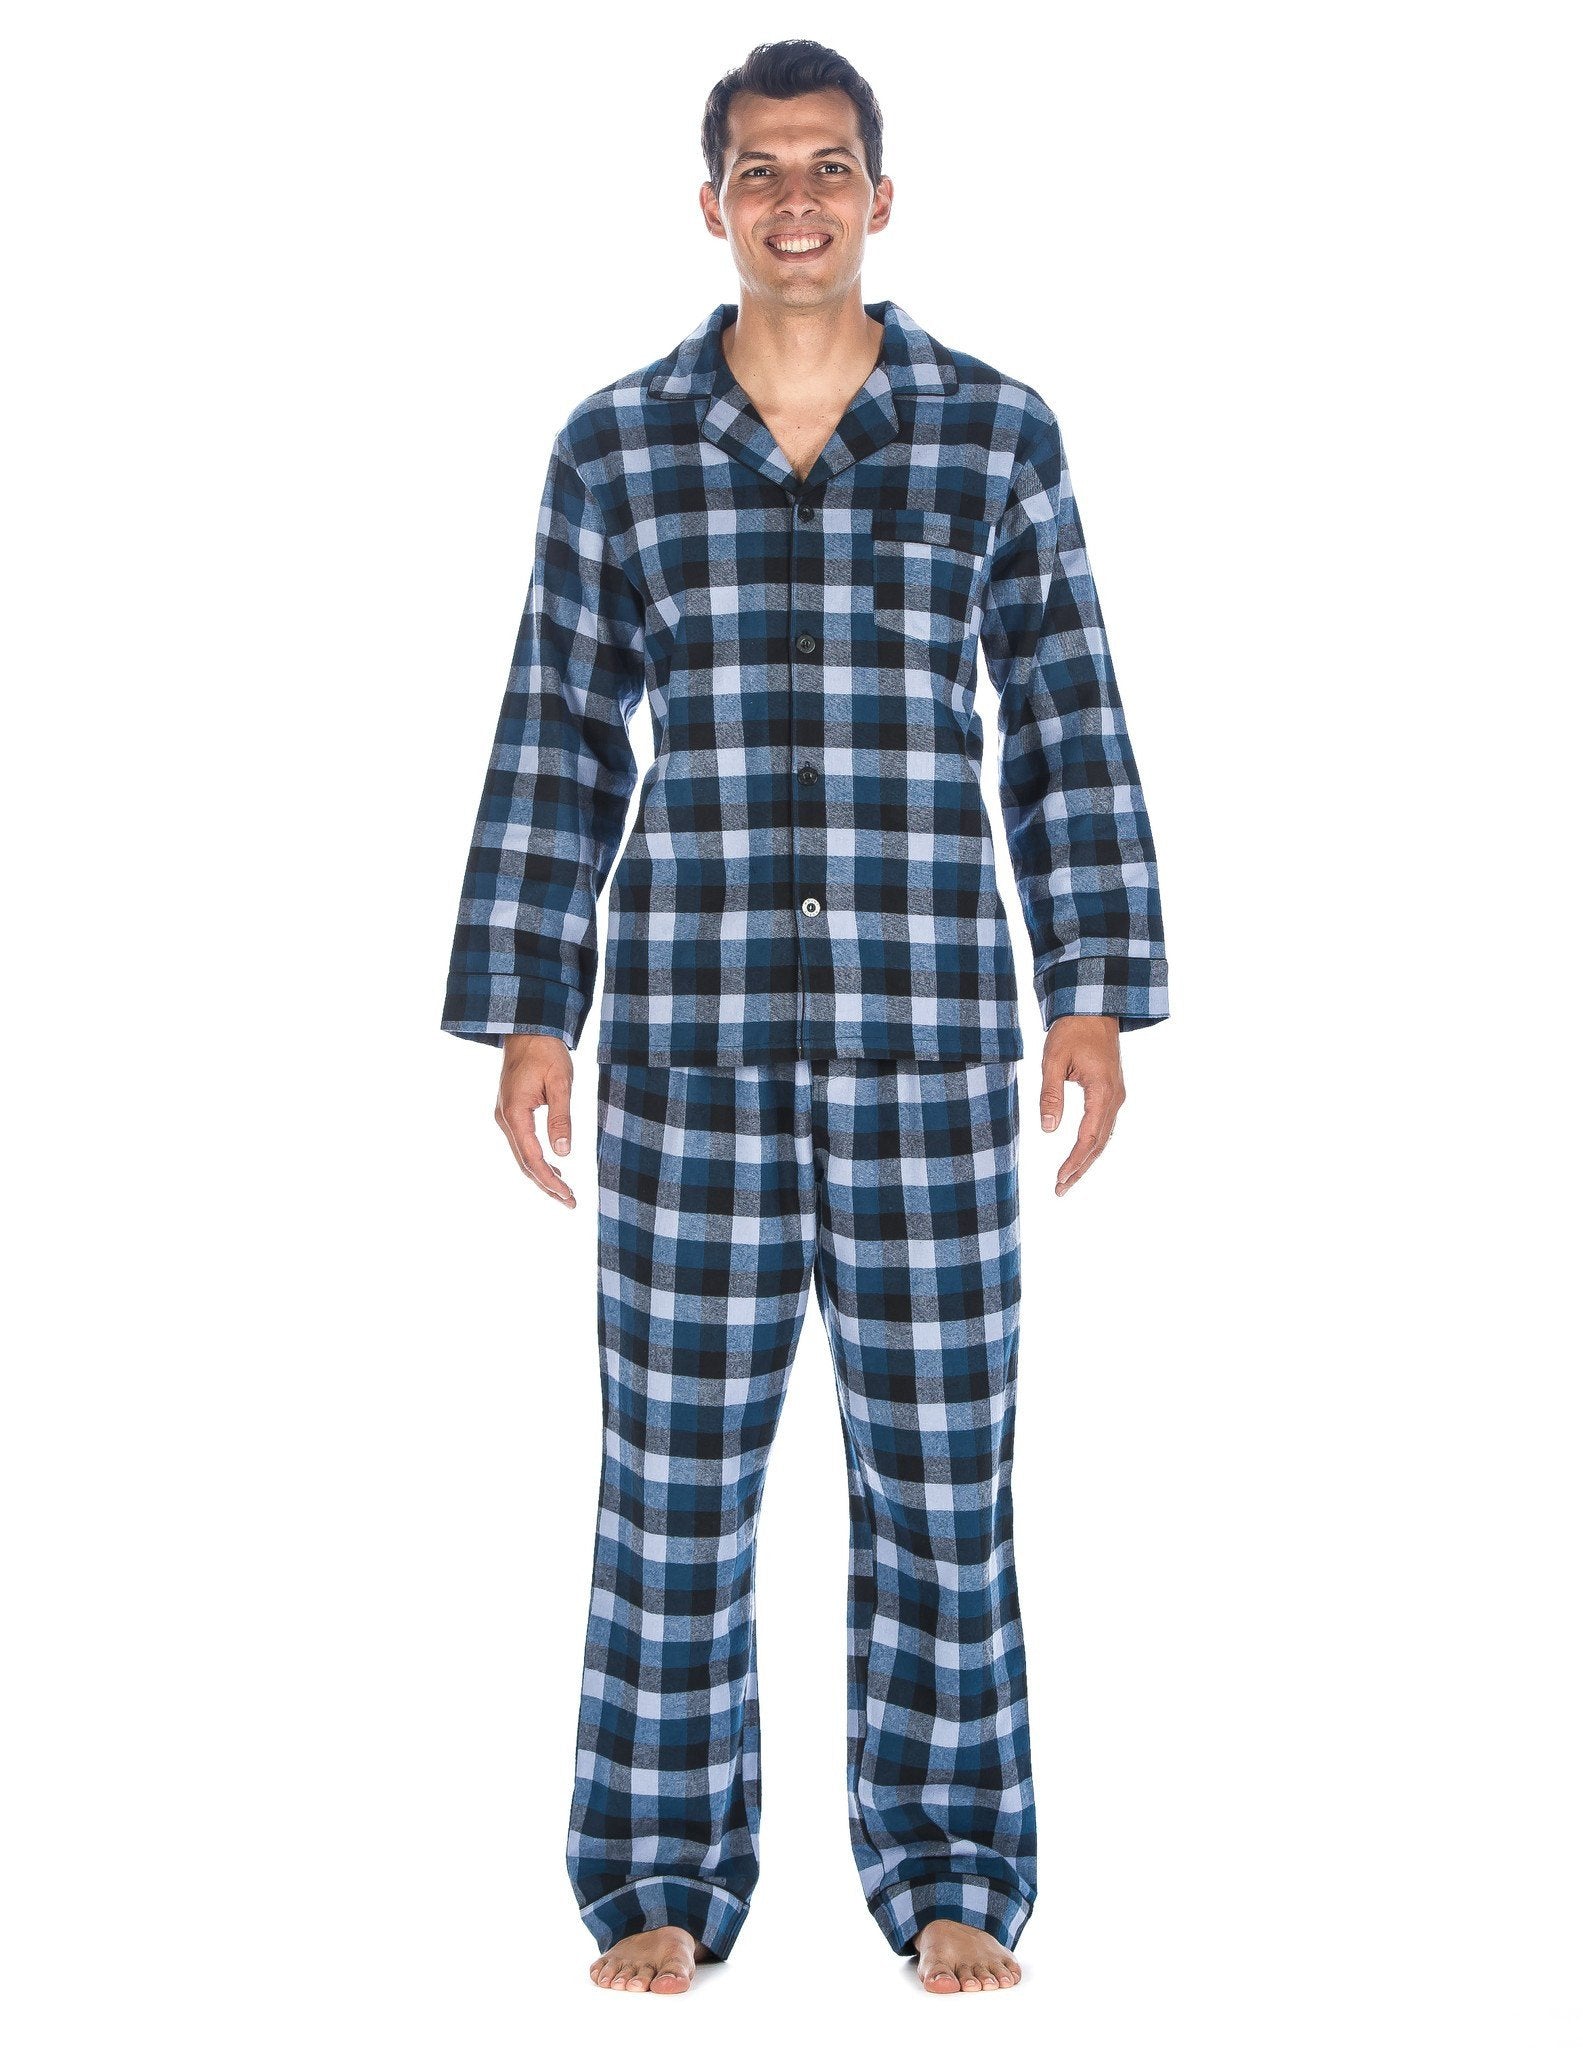 Relaxed Fit Men's Premium 100% Cotton Flannel Pajama Sleepwear Set - Denim Tone Plaid